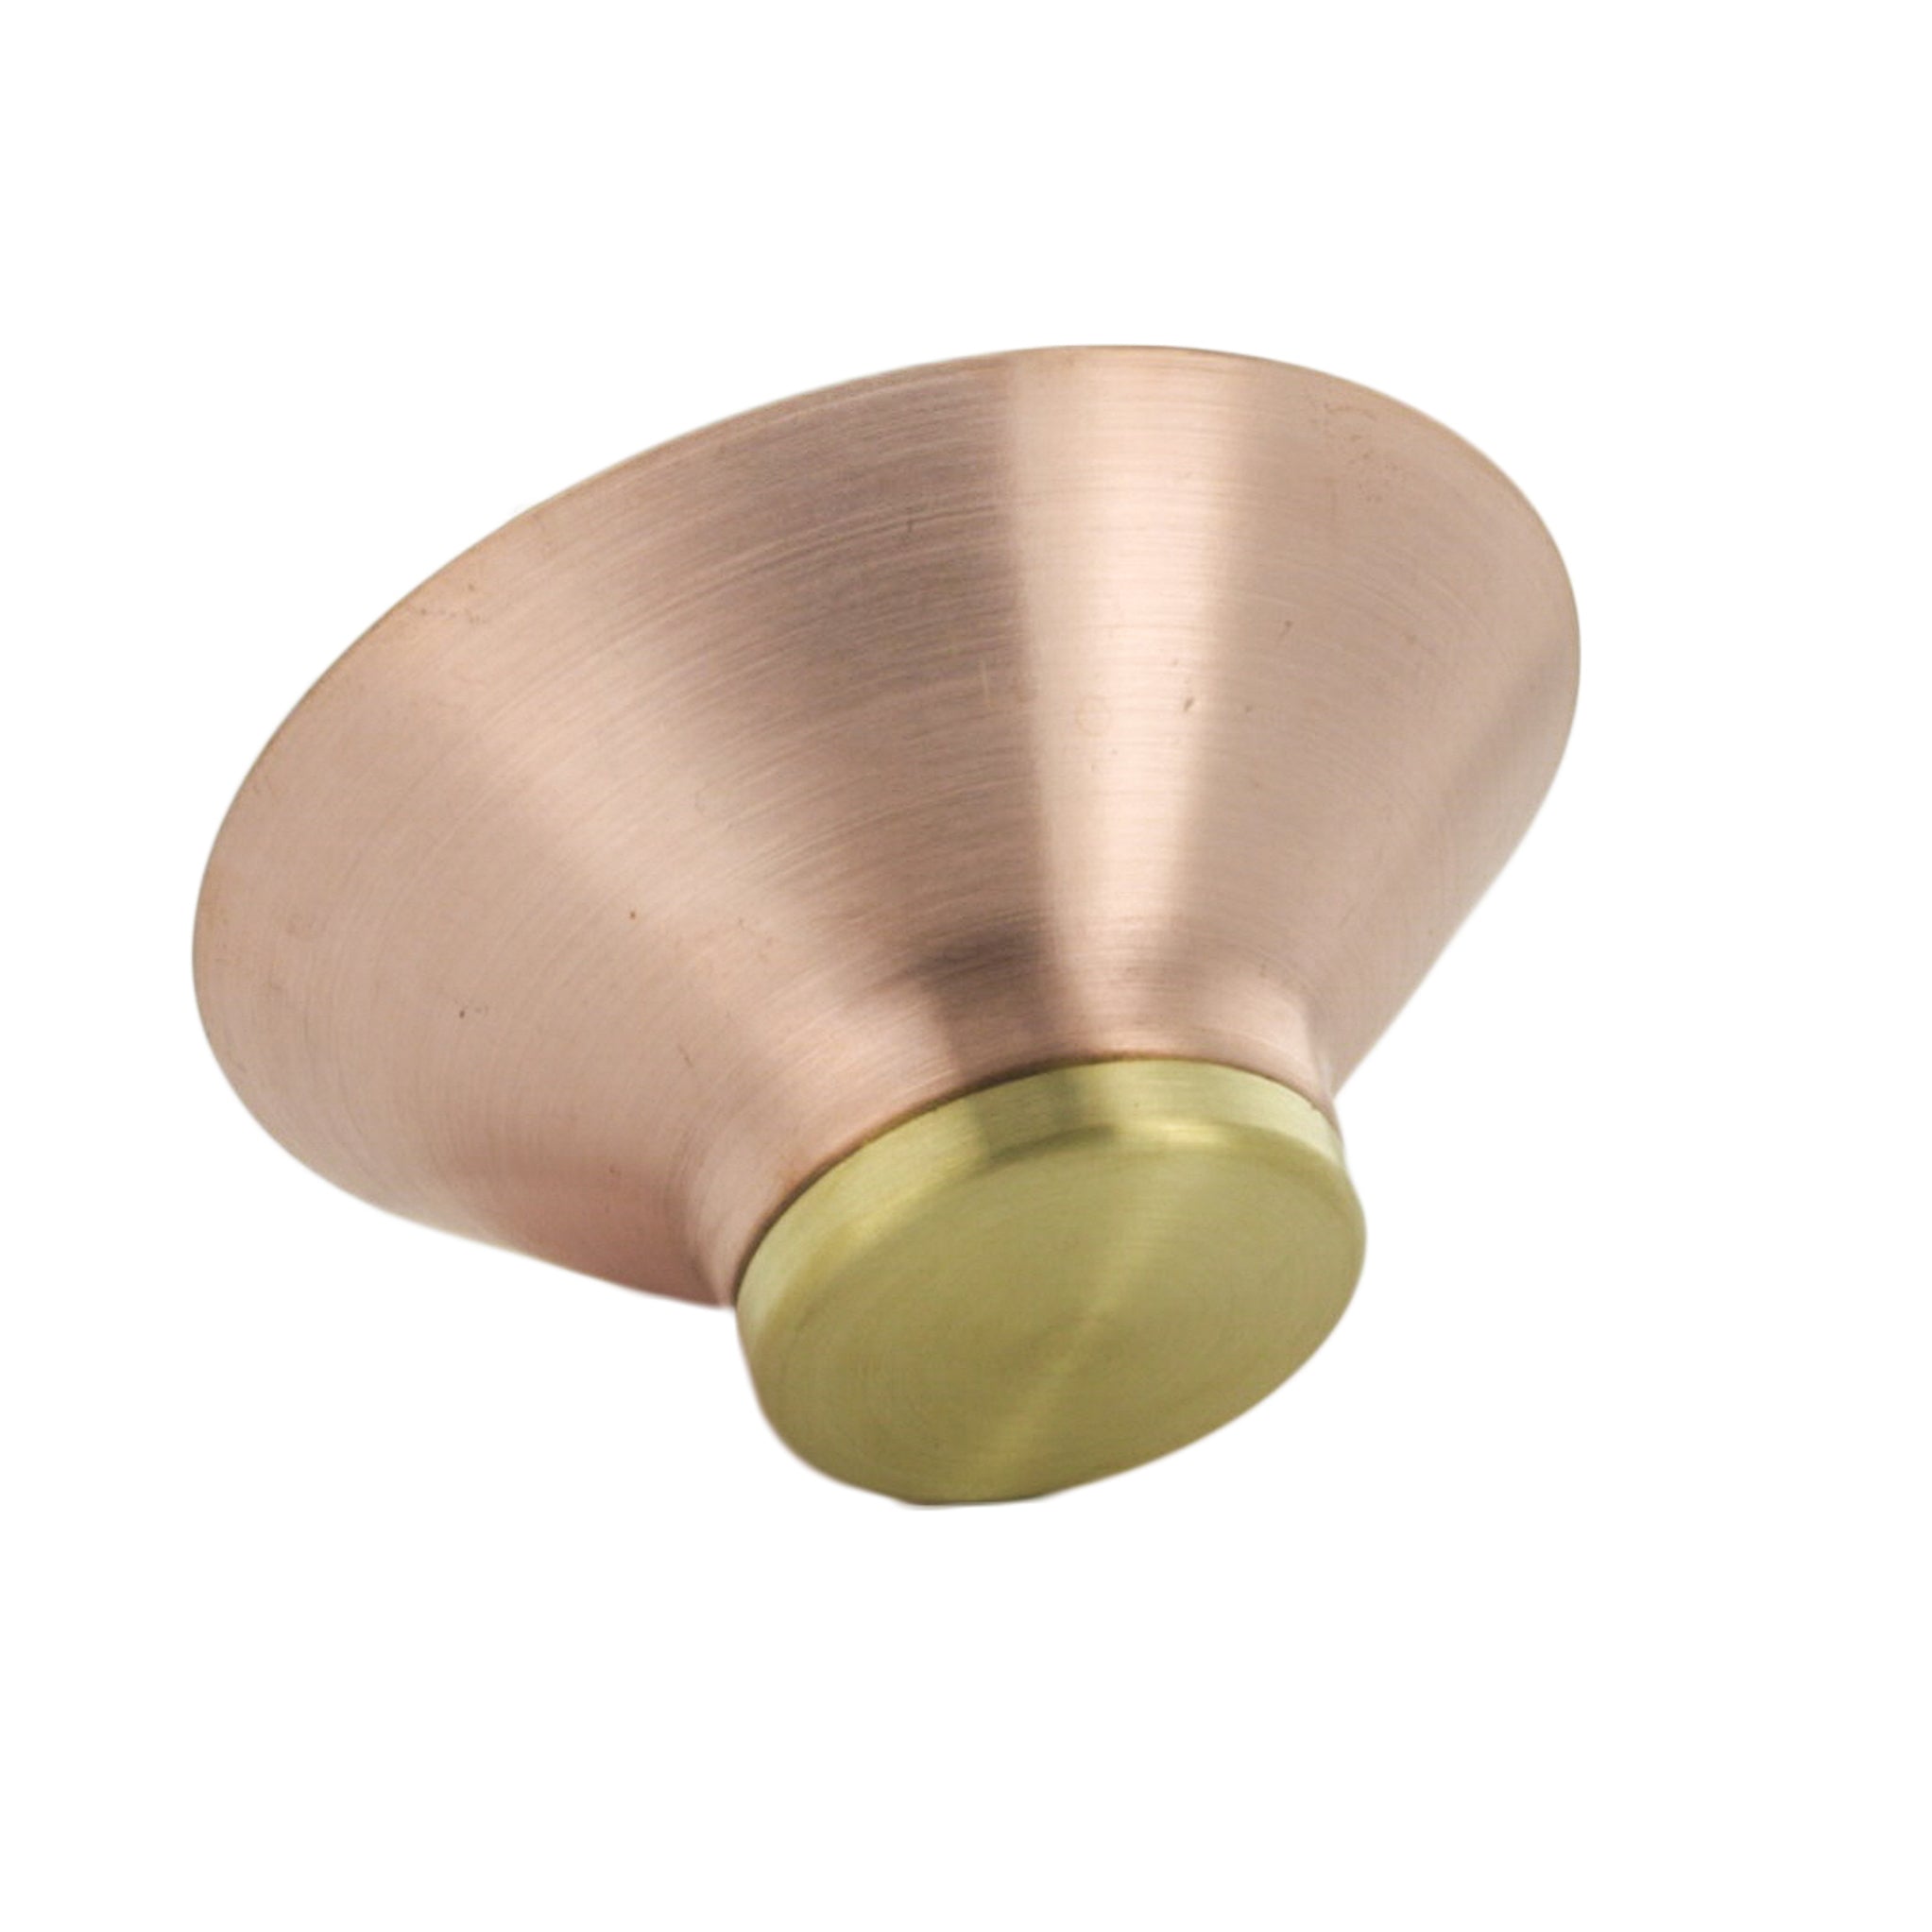 FX - HCLEDTACU - Petite Top HC, LED, Copper